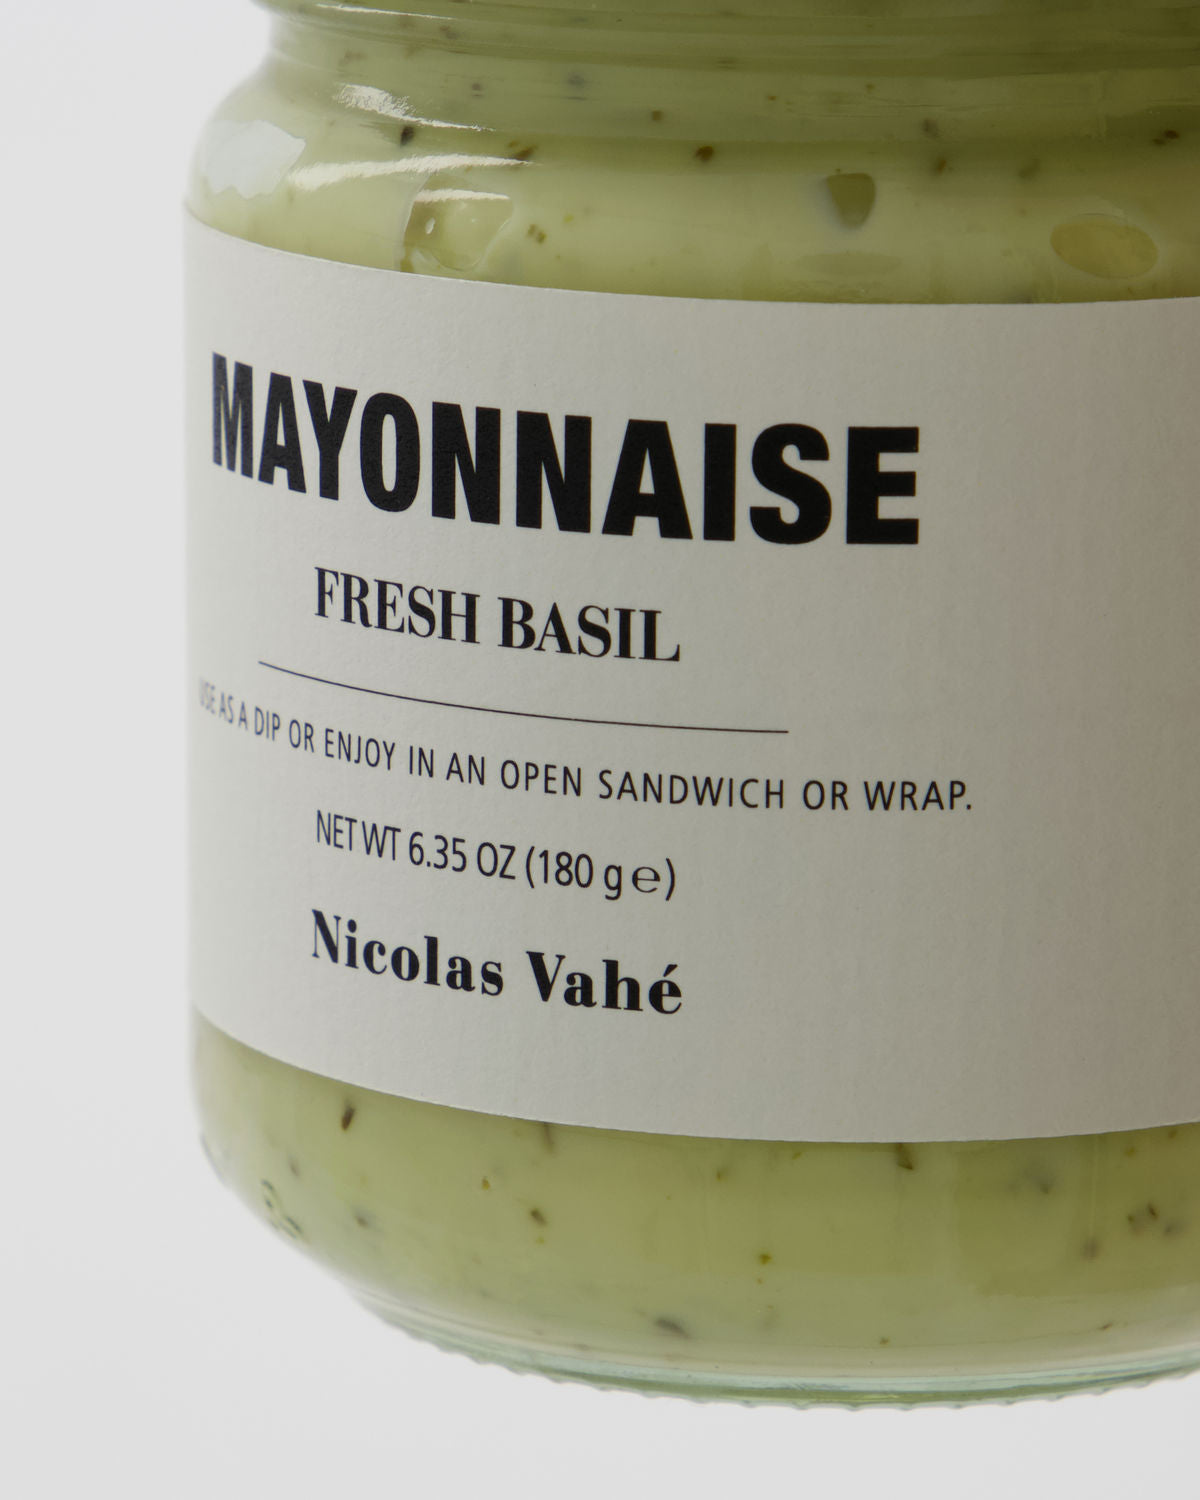 Nicolas Vahé - Mayonaise, fresh basil